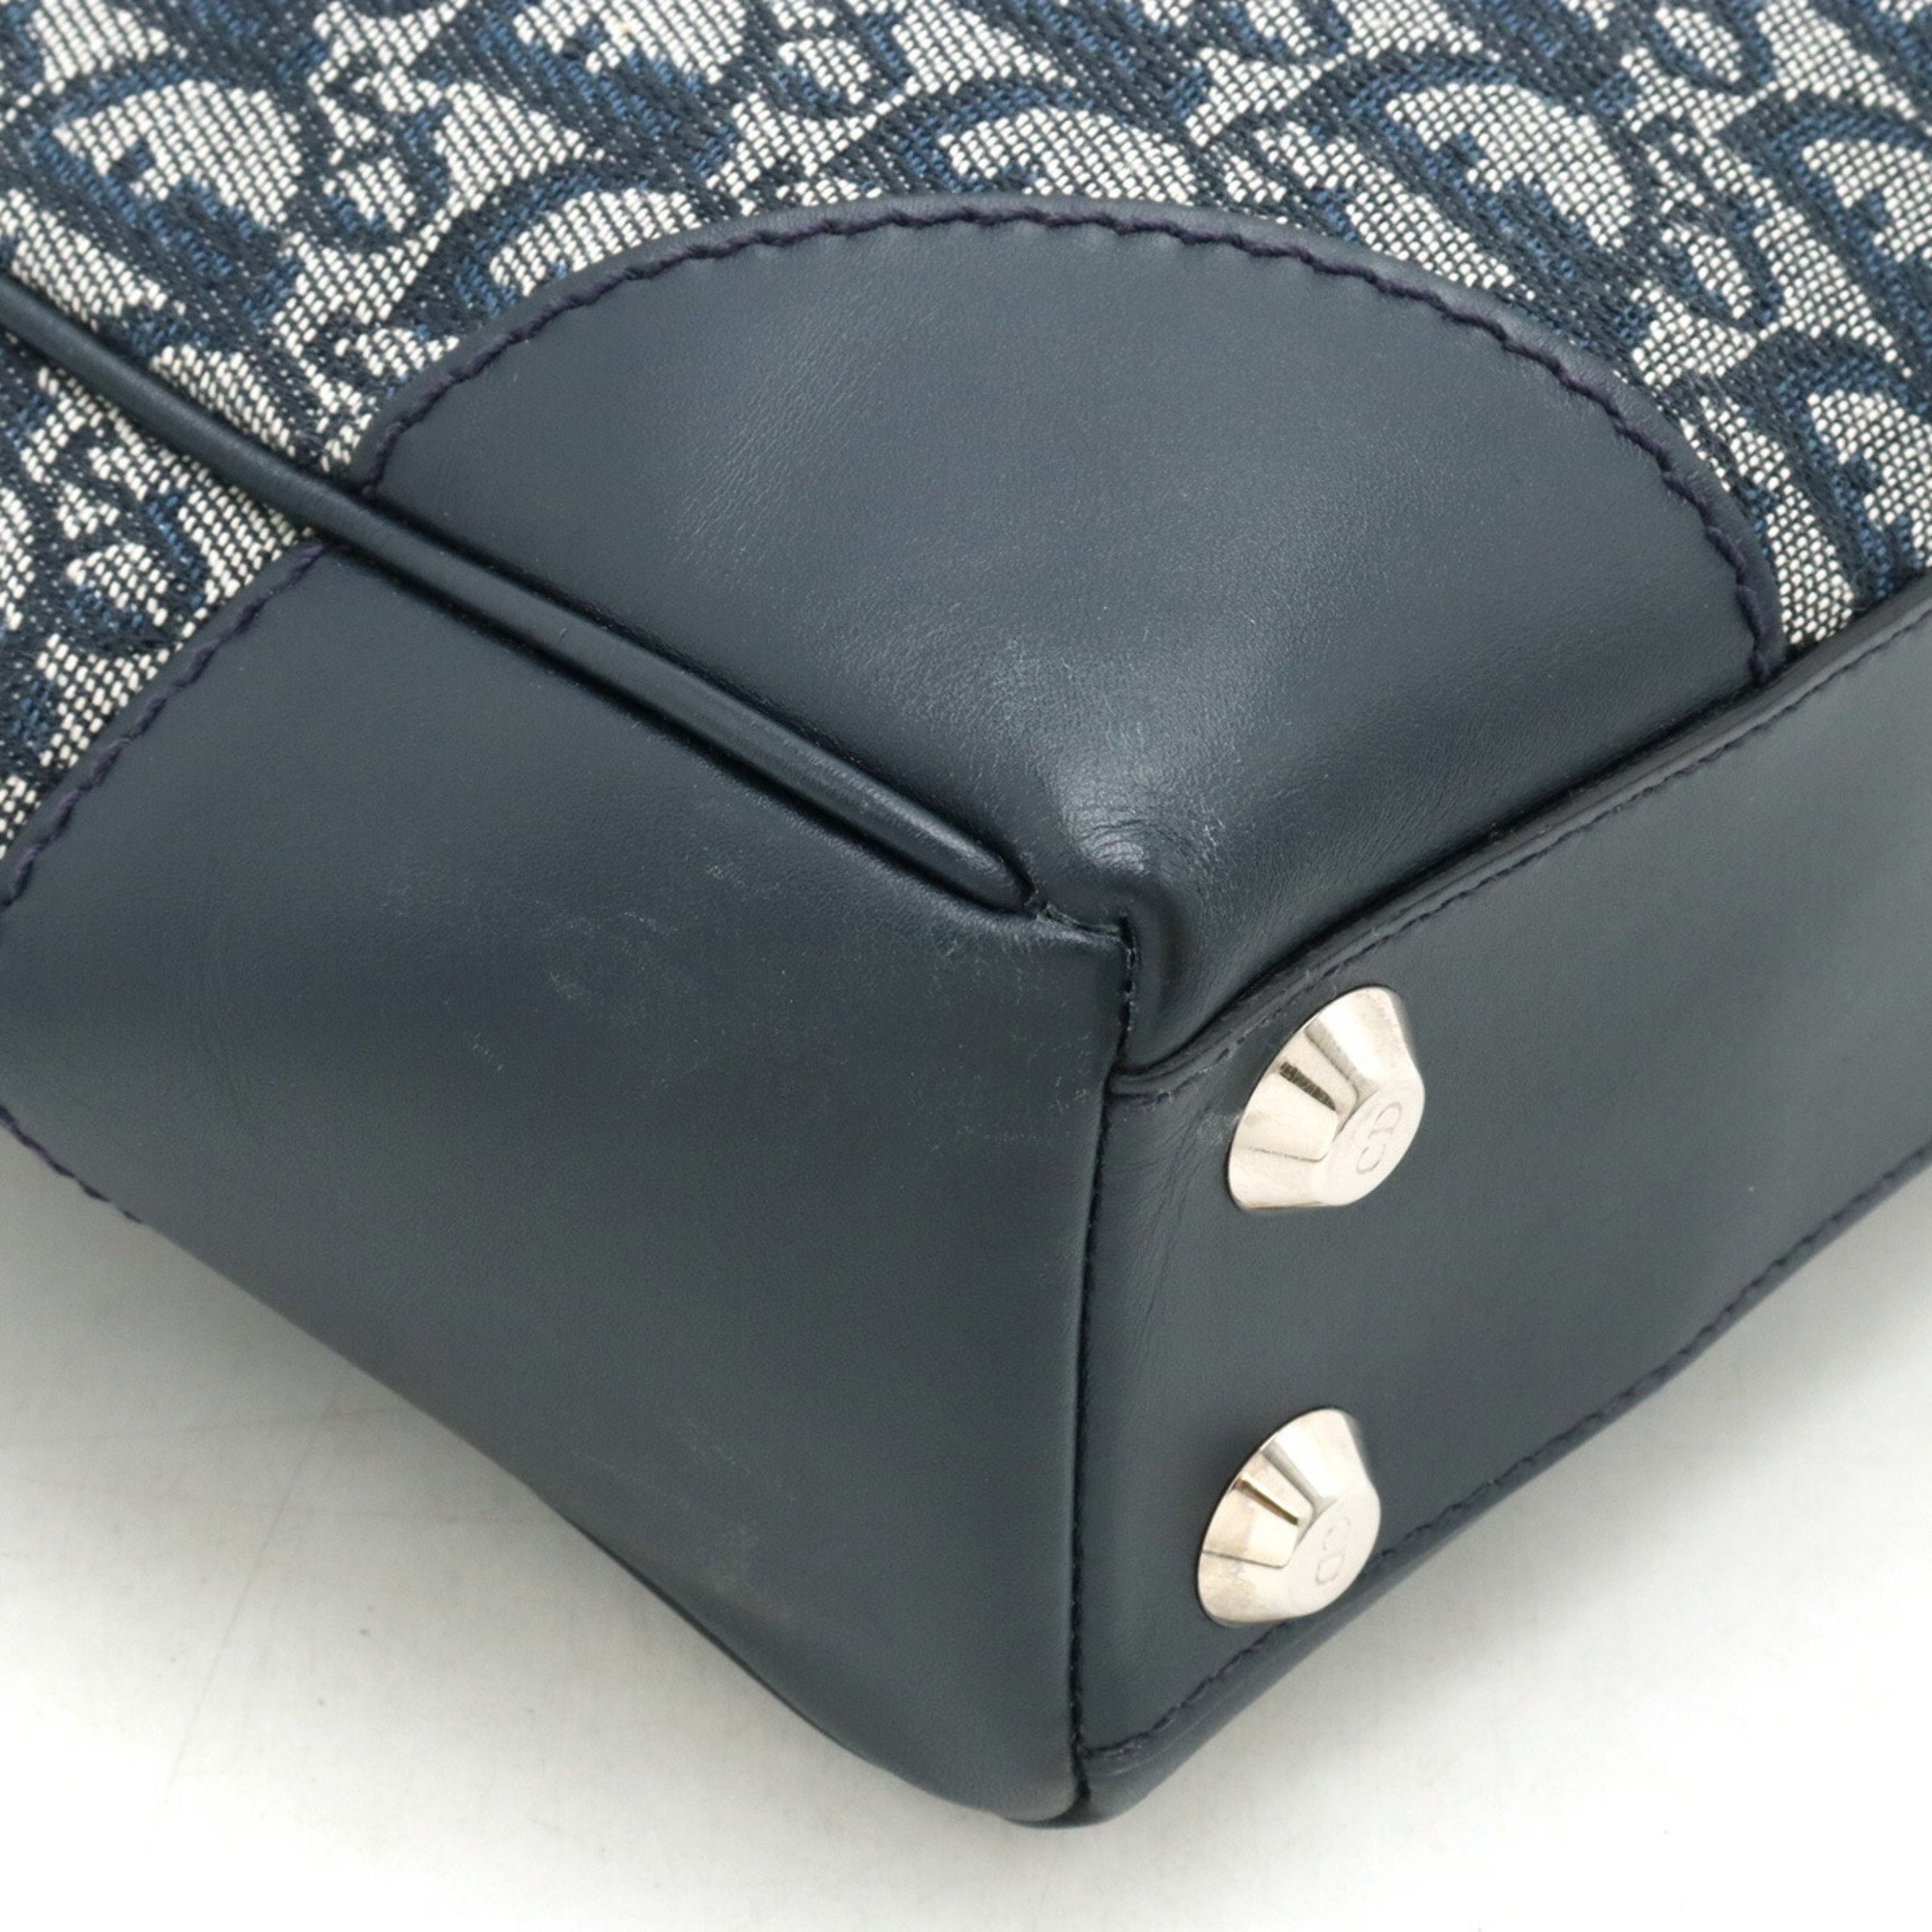 Christian Dior Trotter handbag tote bag canvas leather navy blue